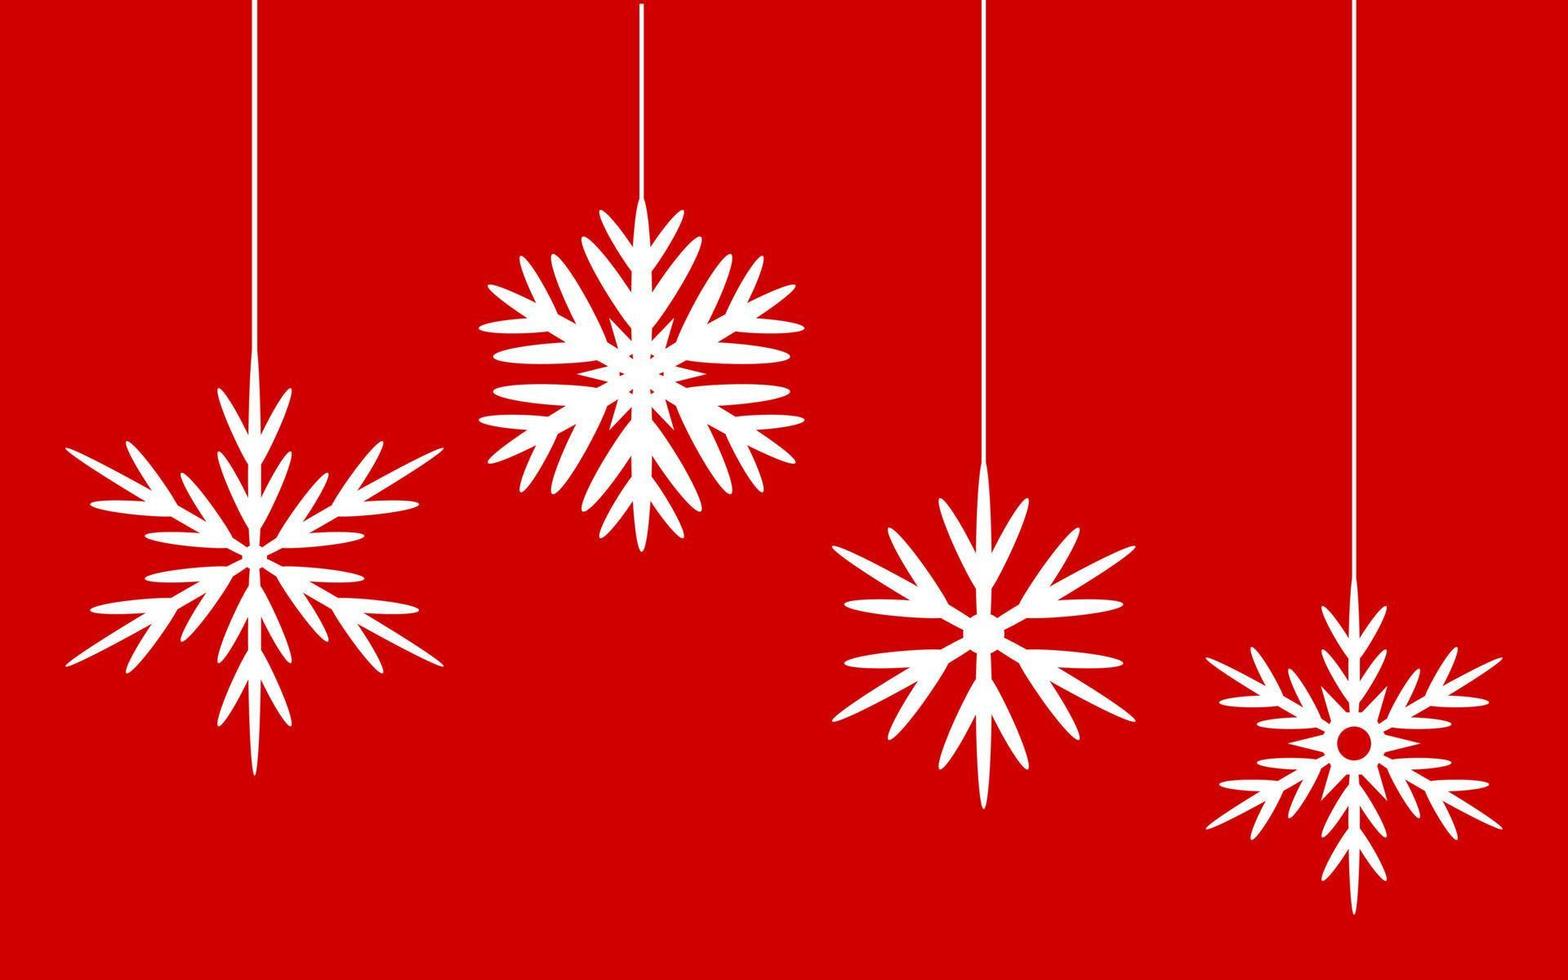 banner de natal com flocos de neve vetor